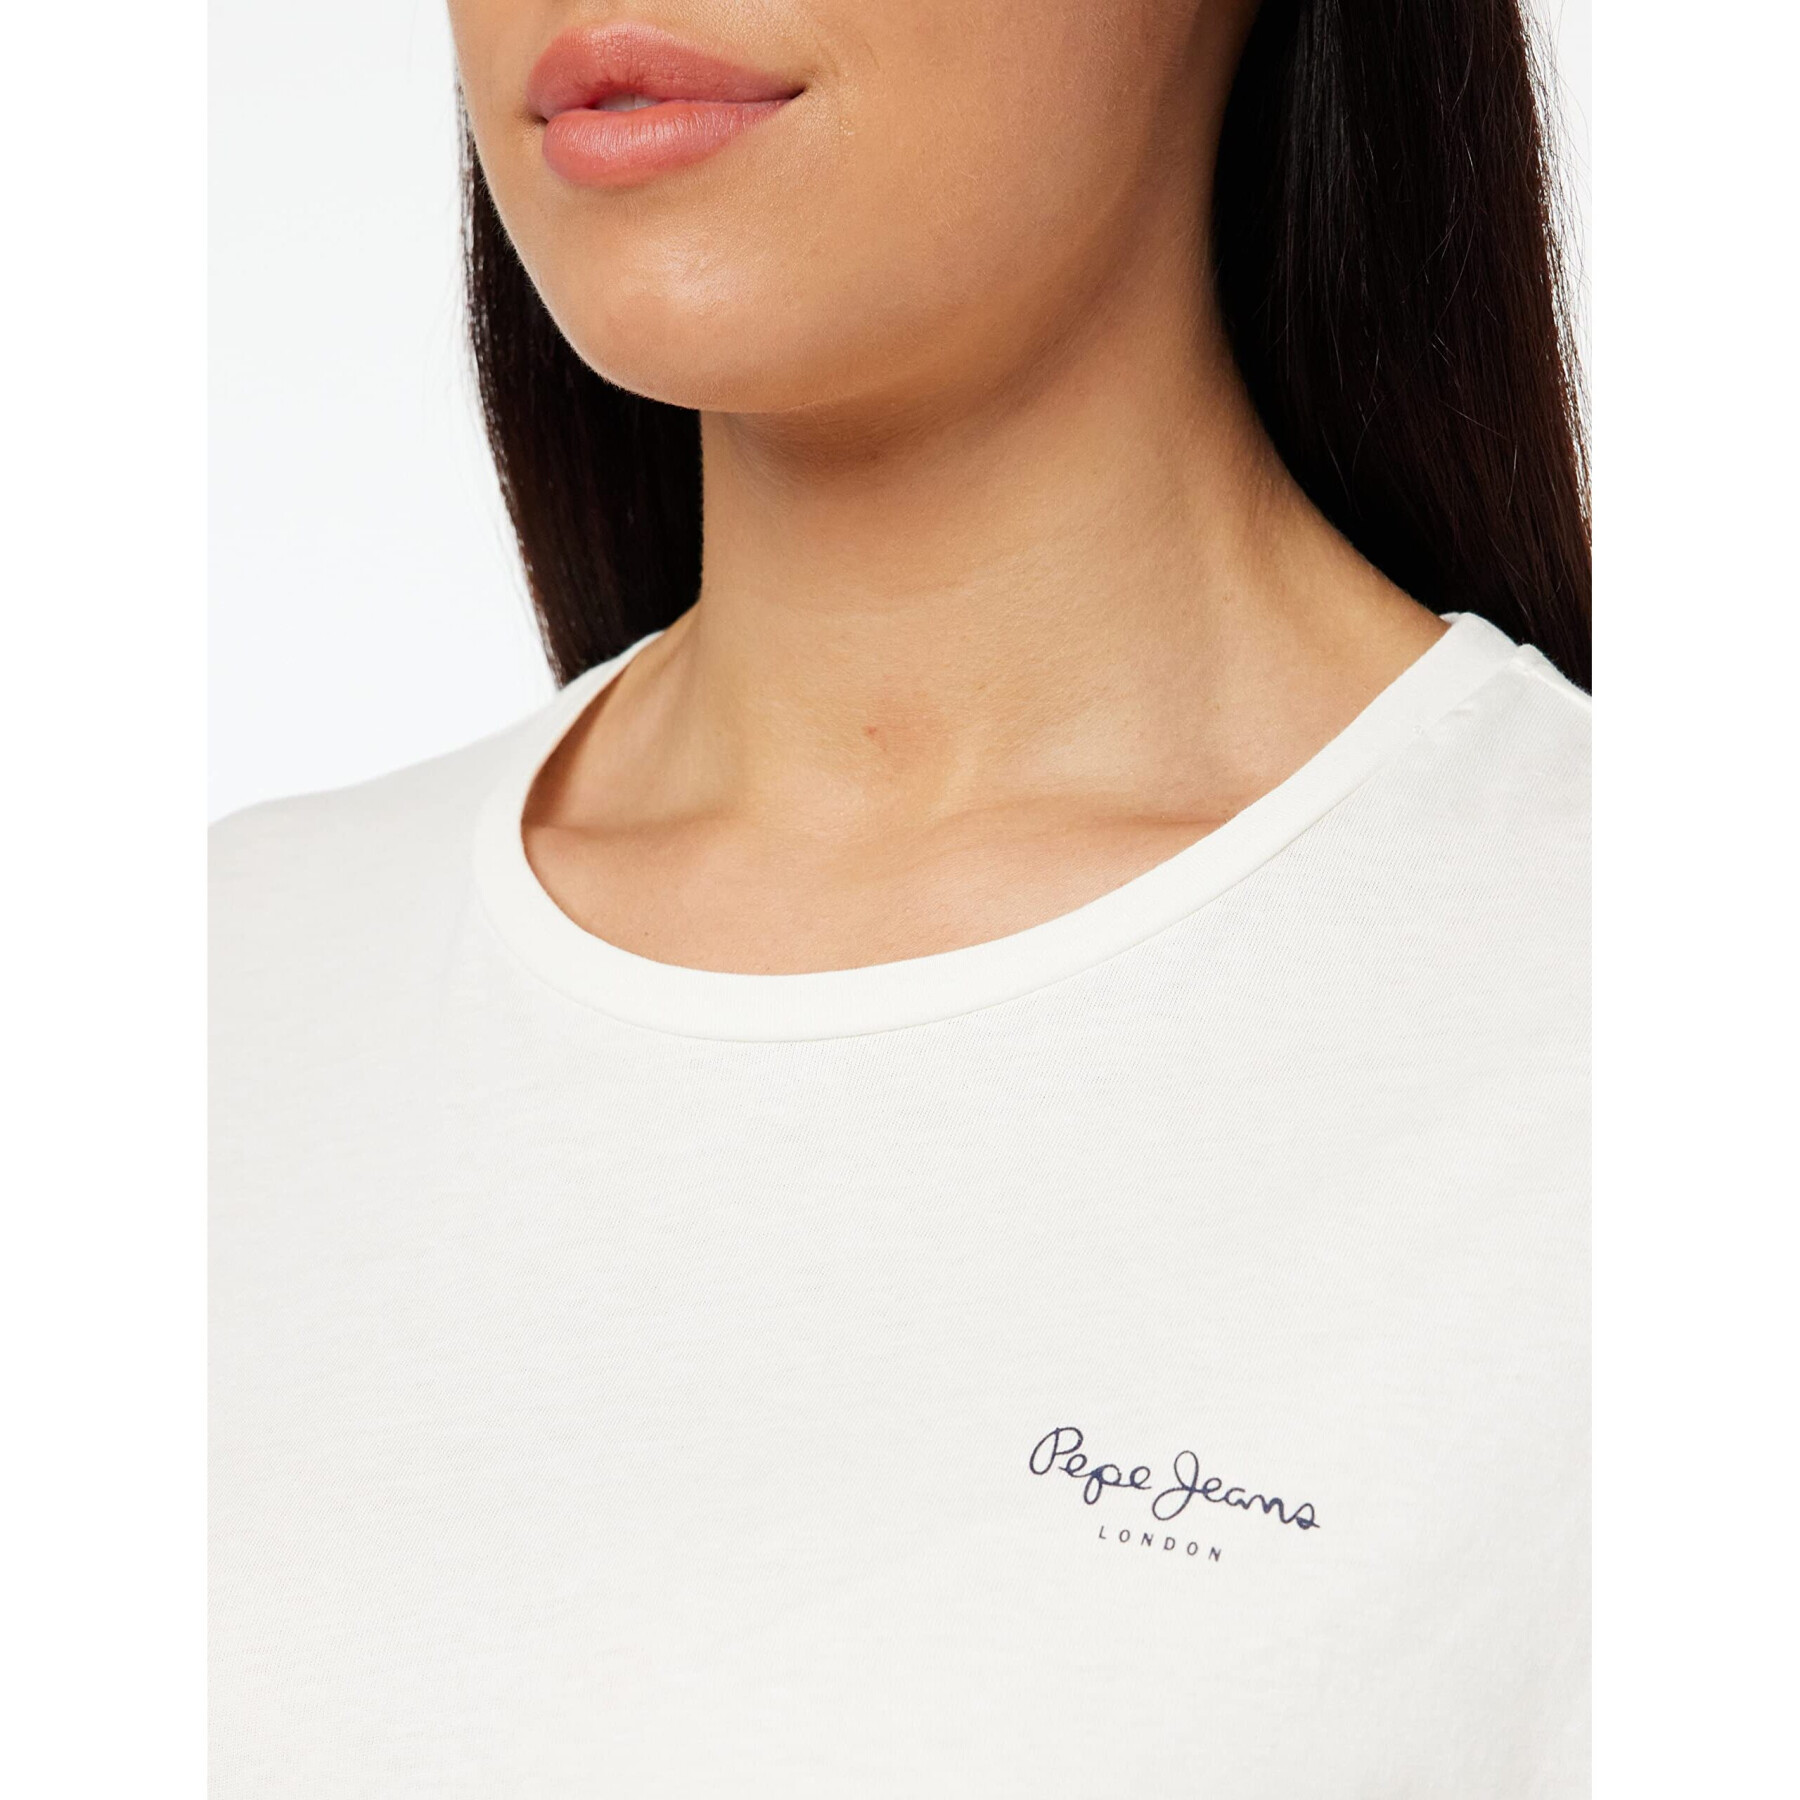 Camiseta feminina Pepe Jeans Bloom